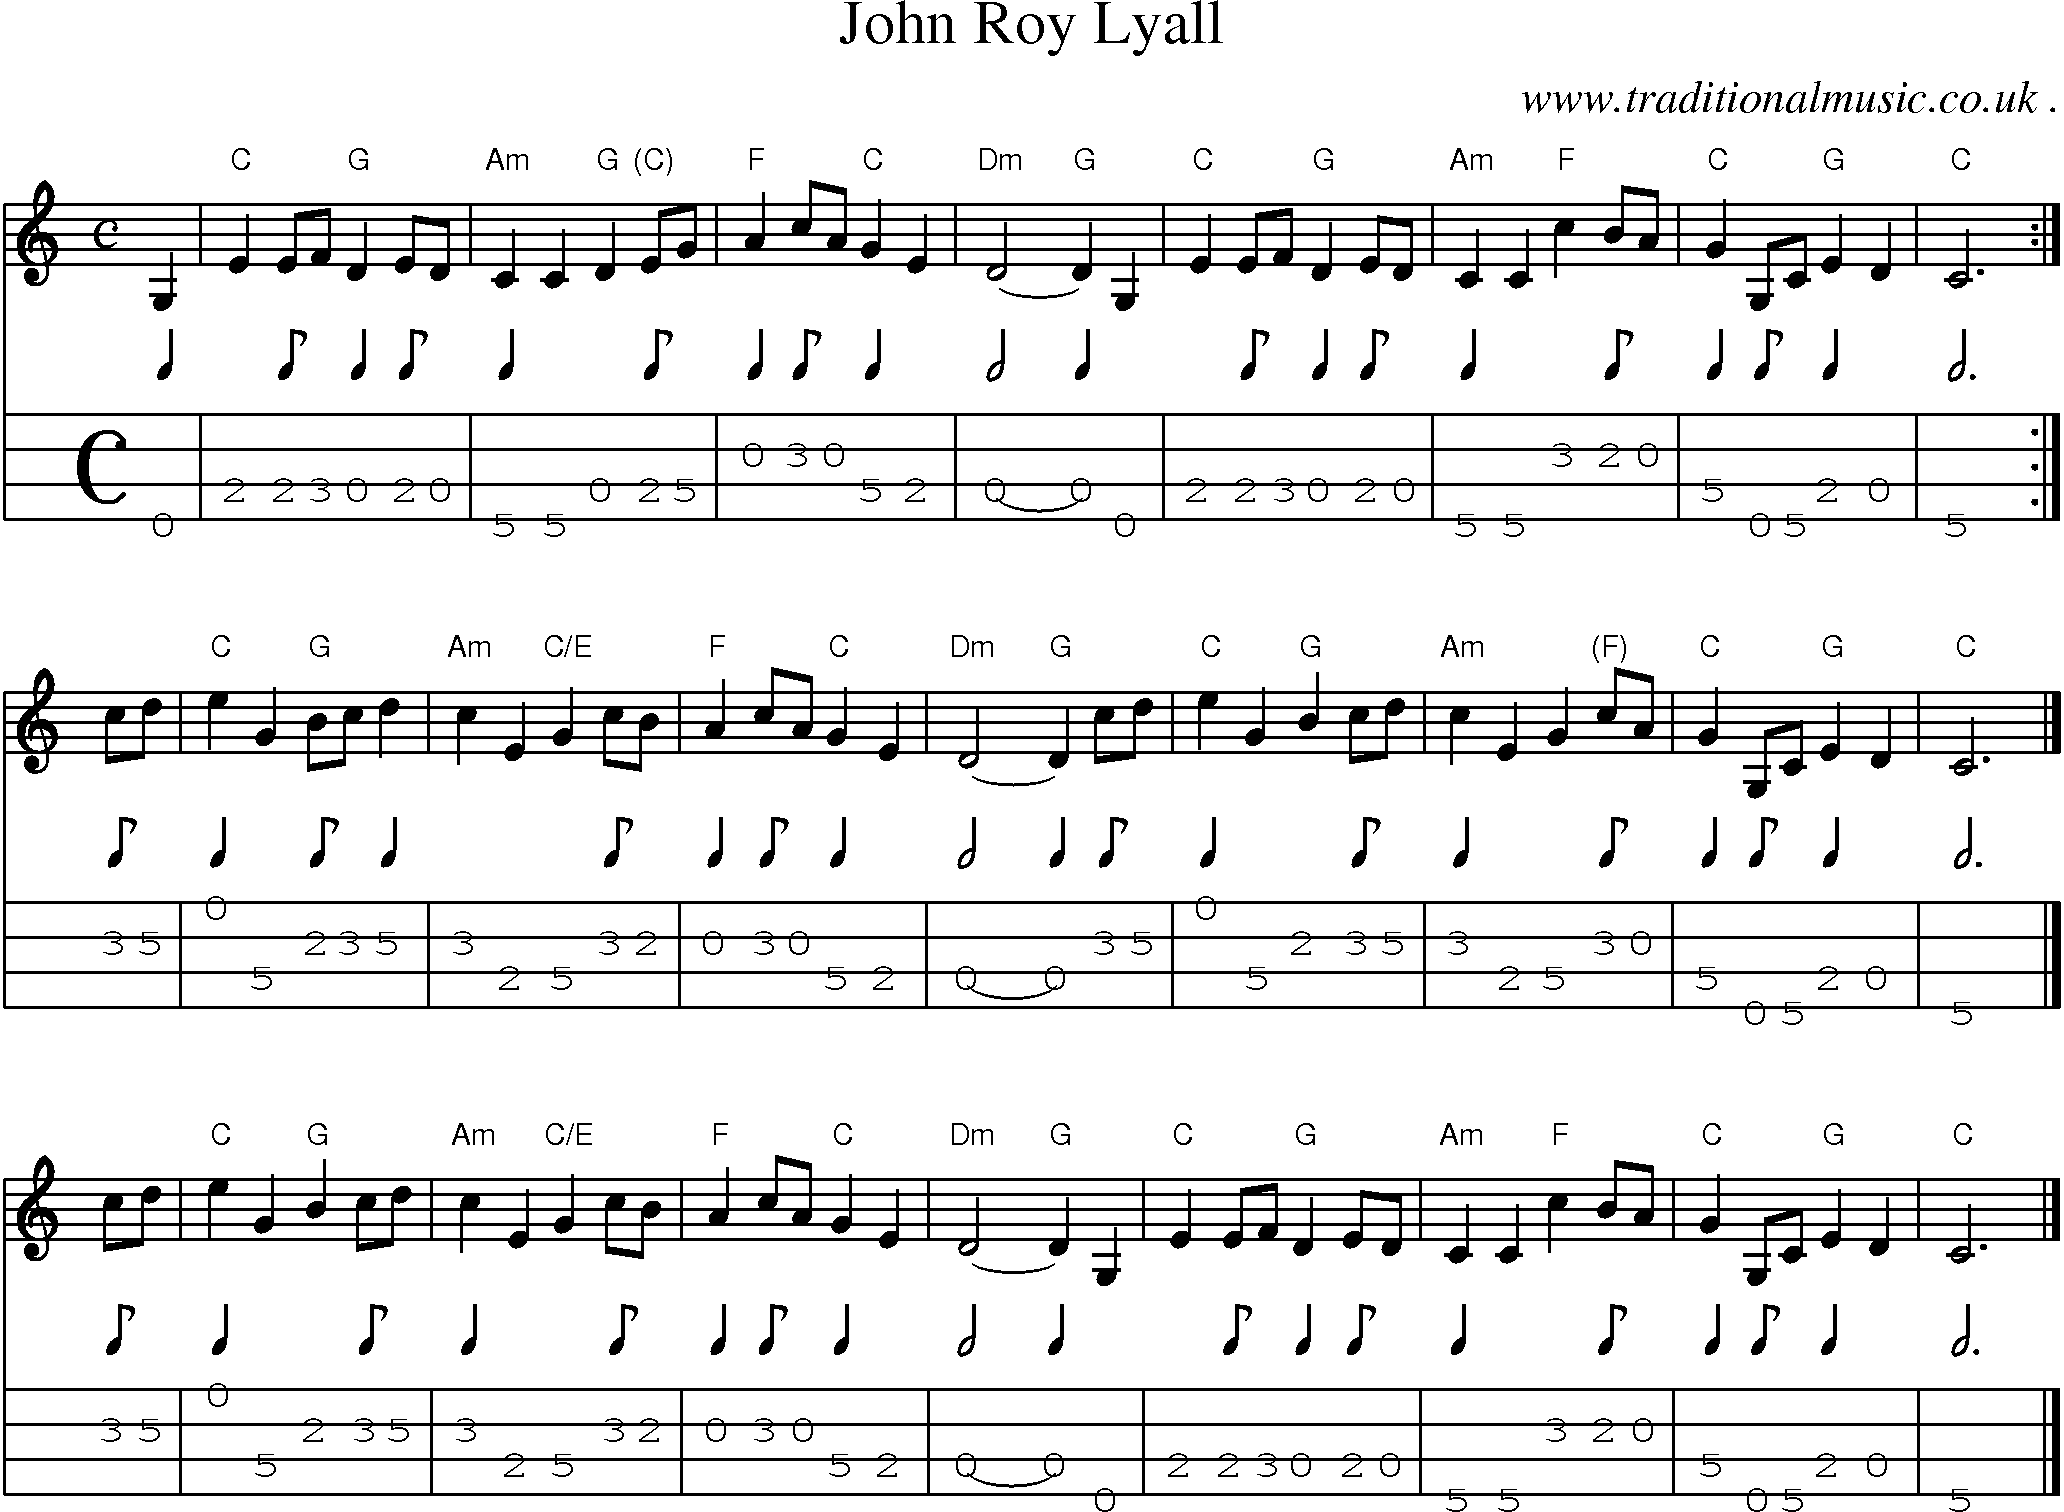 Sheet-music  score, Chords and Mandolin Tabs for John Roy Lyall